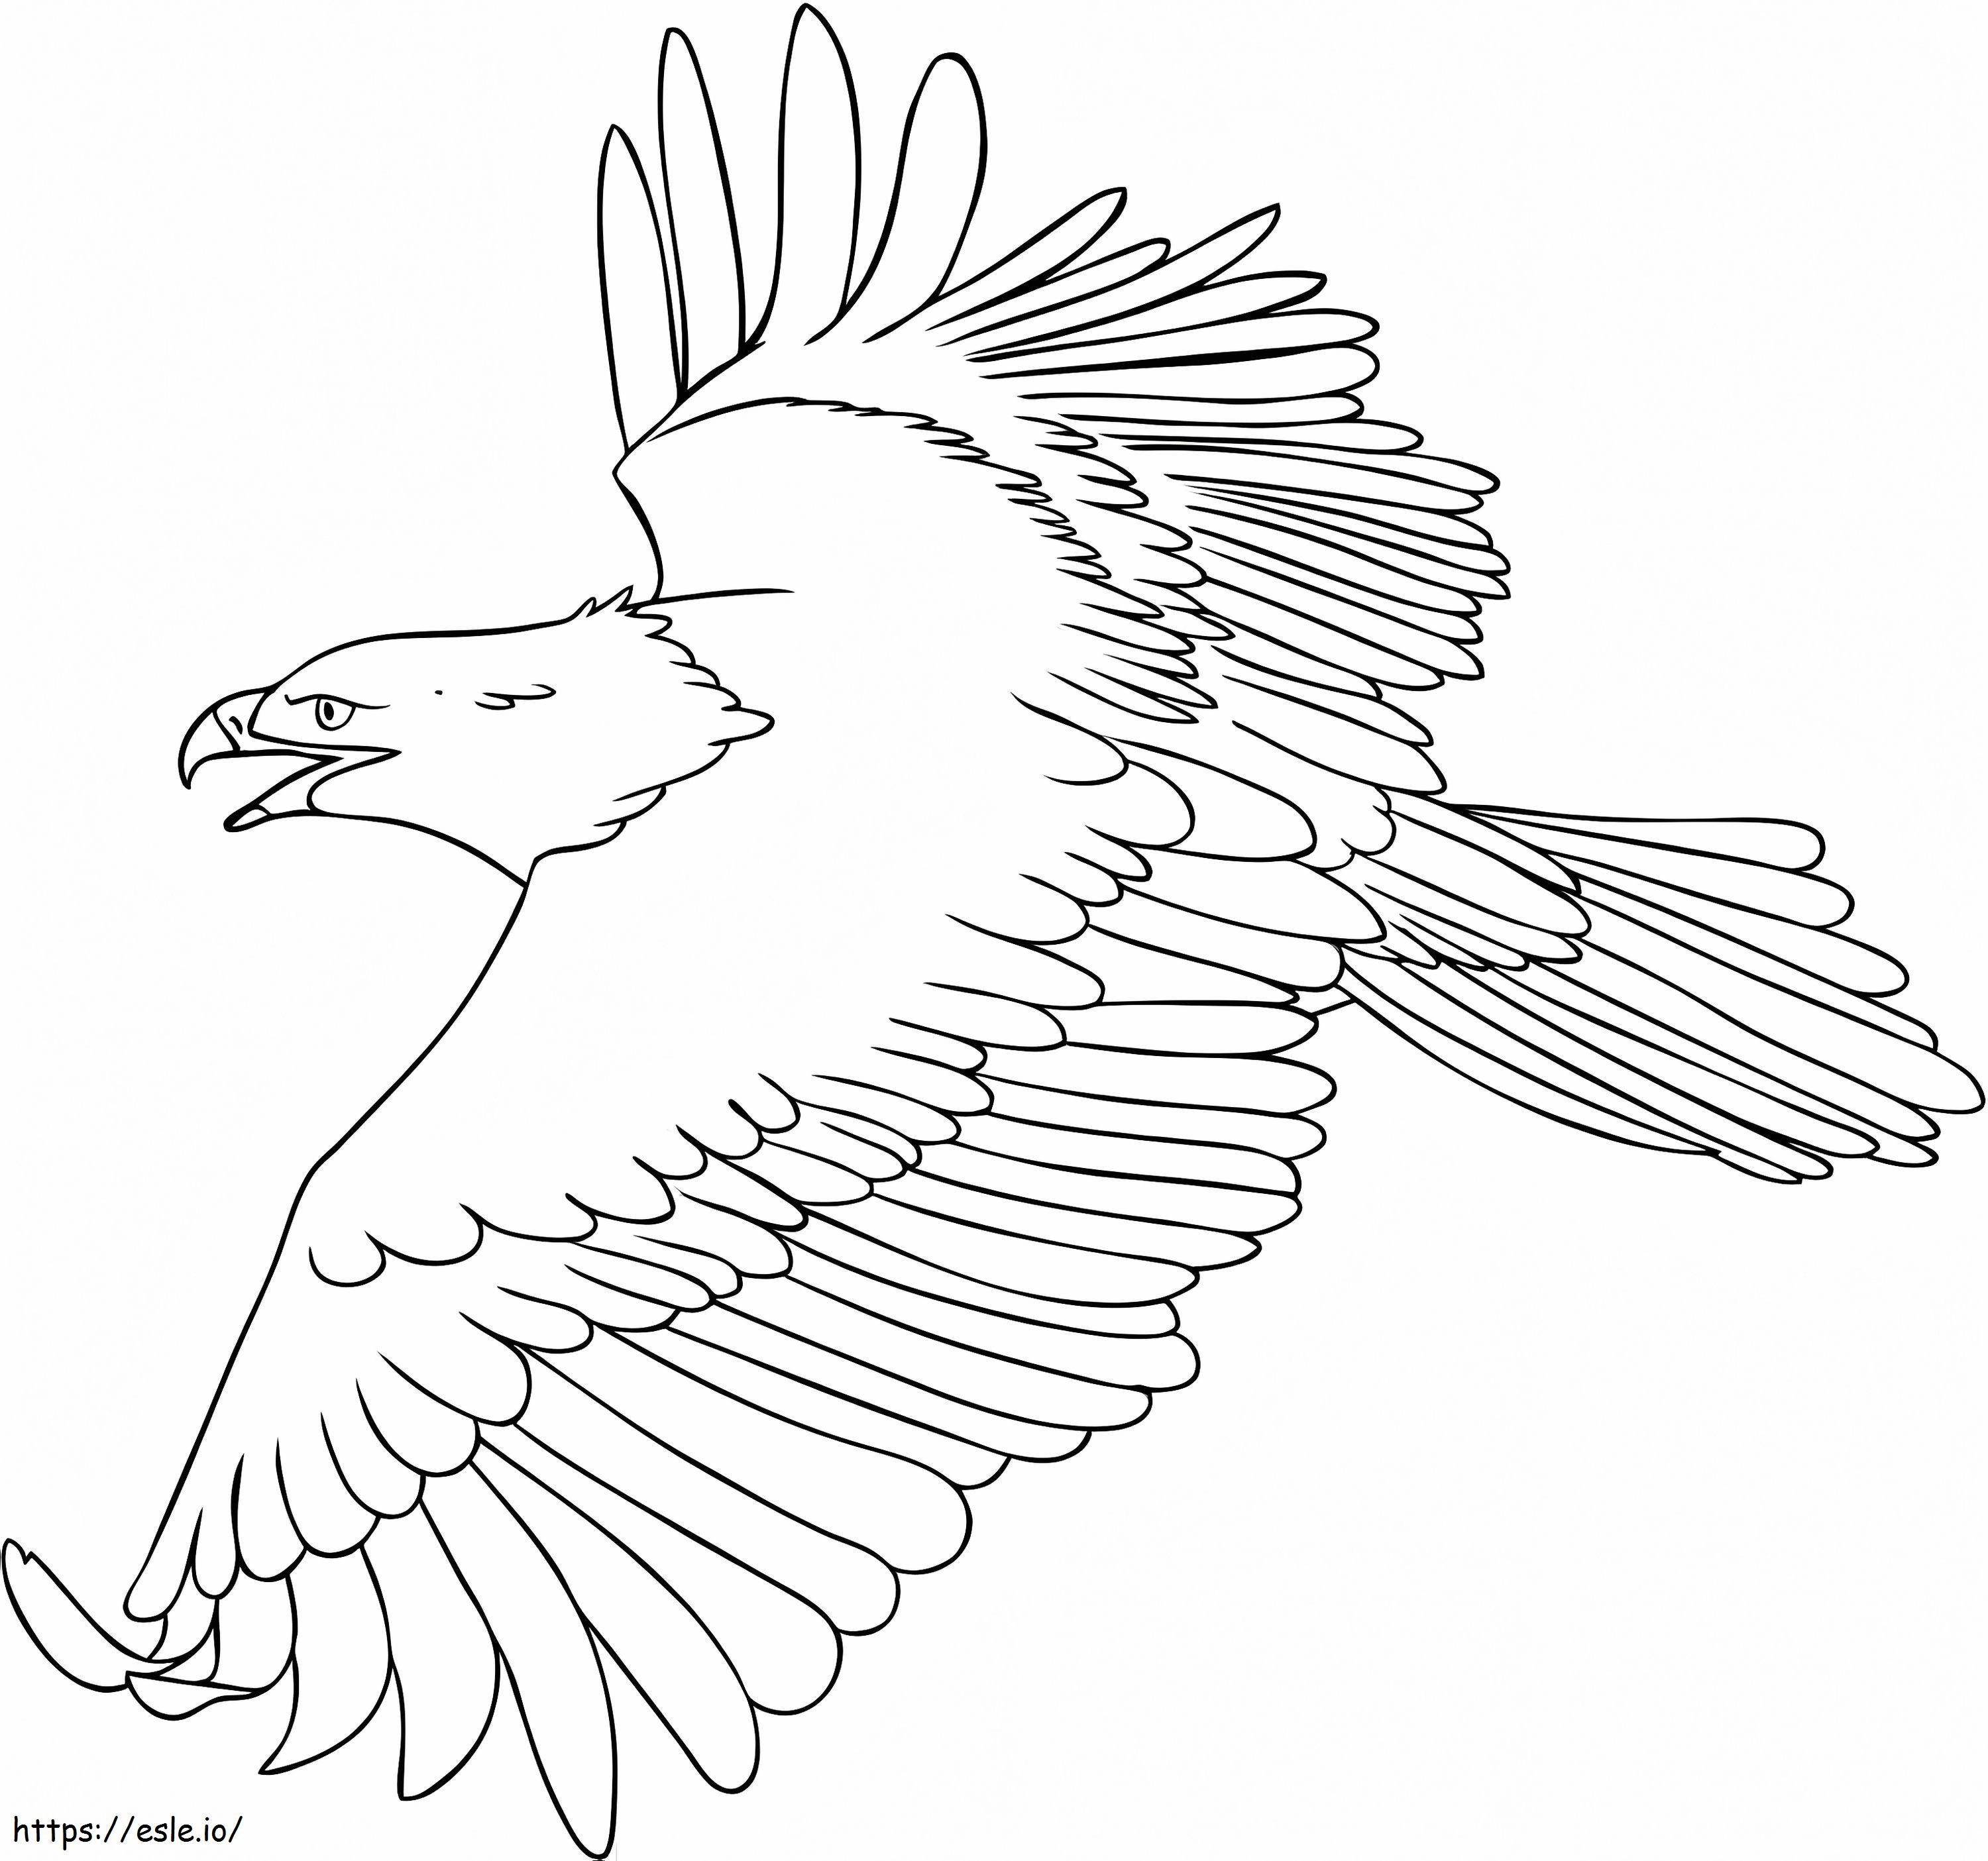 Ausmalbild: Fliegender Adler ausmalbilder